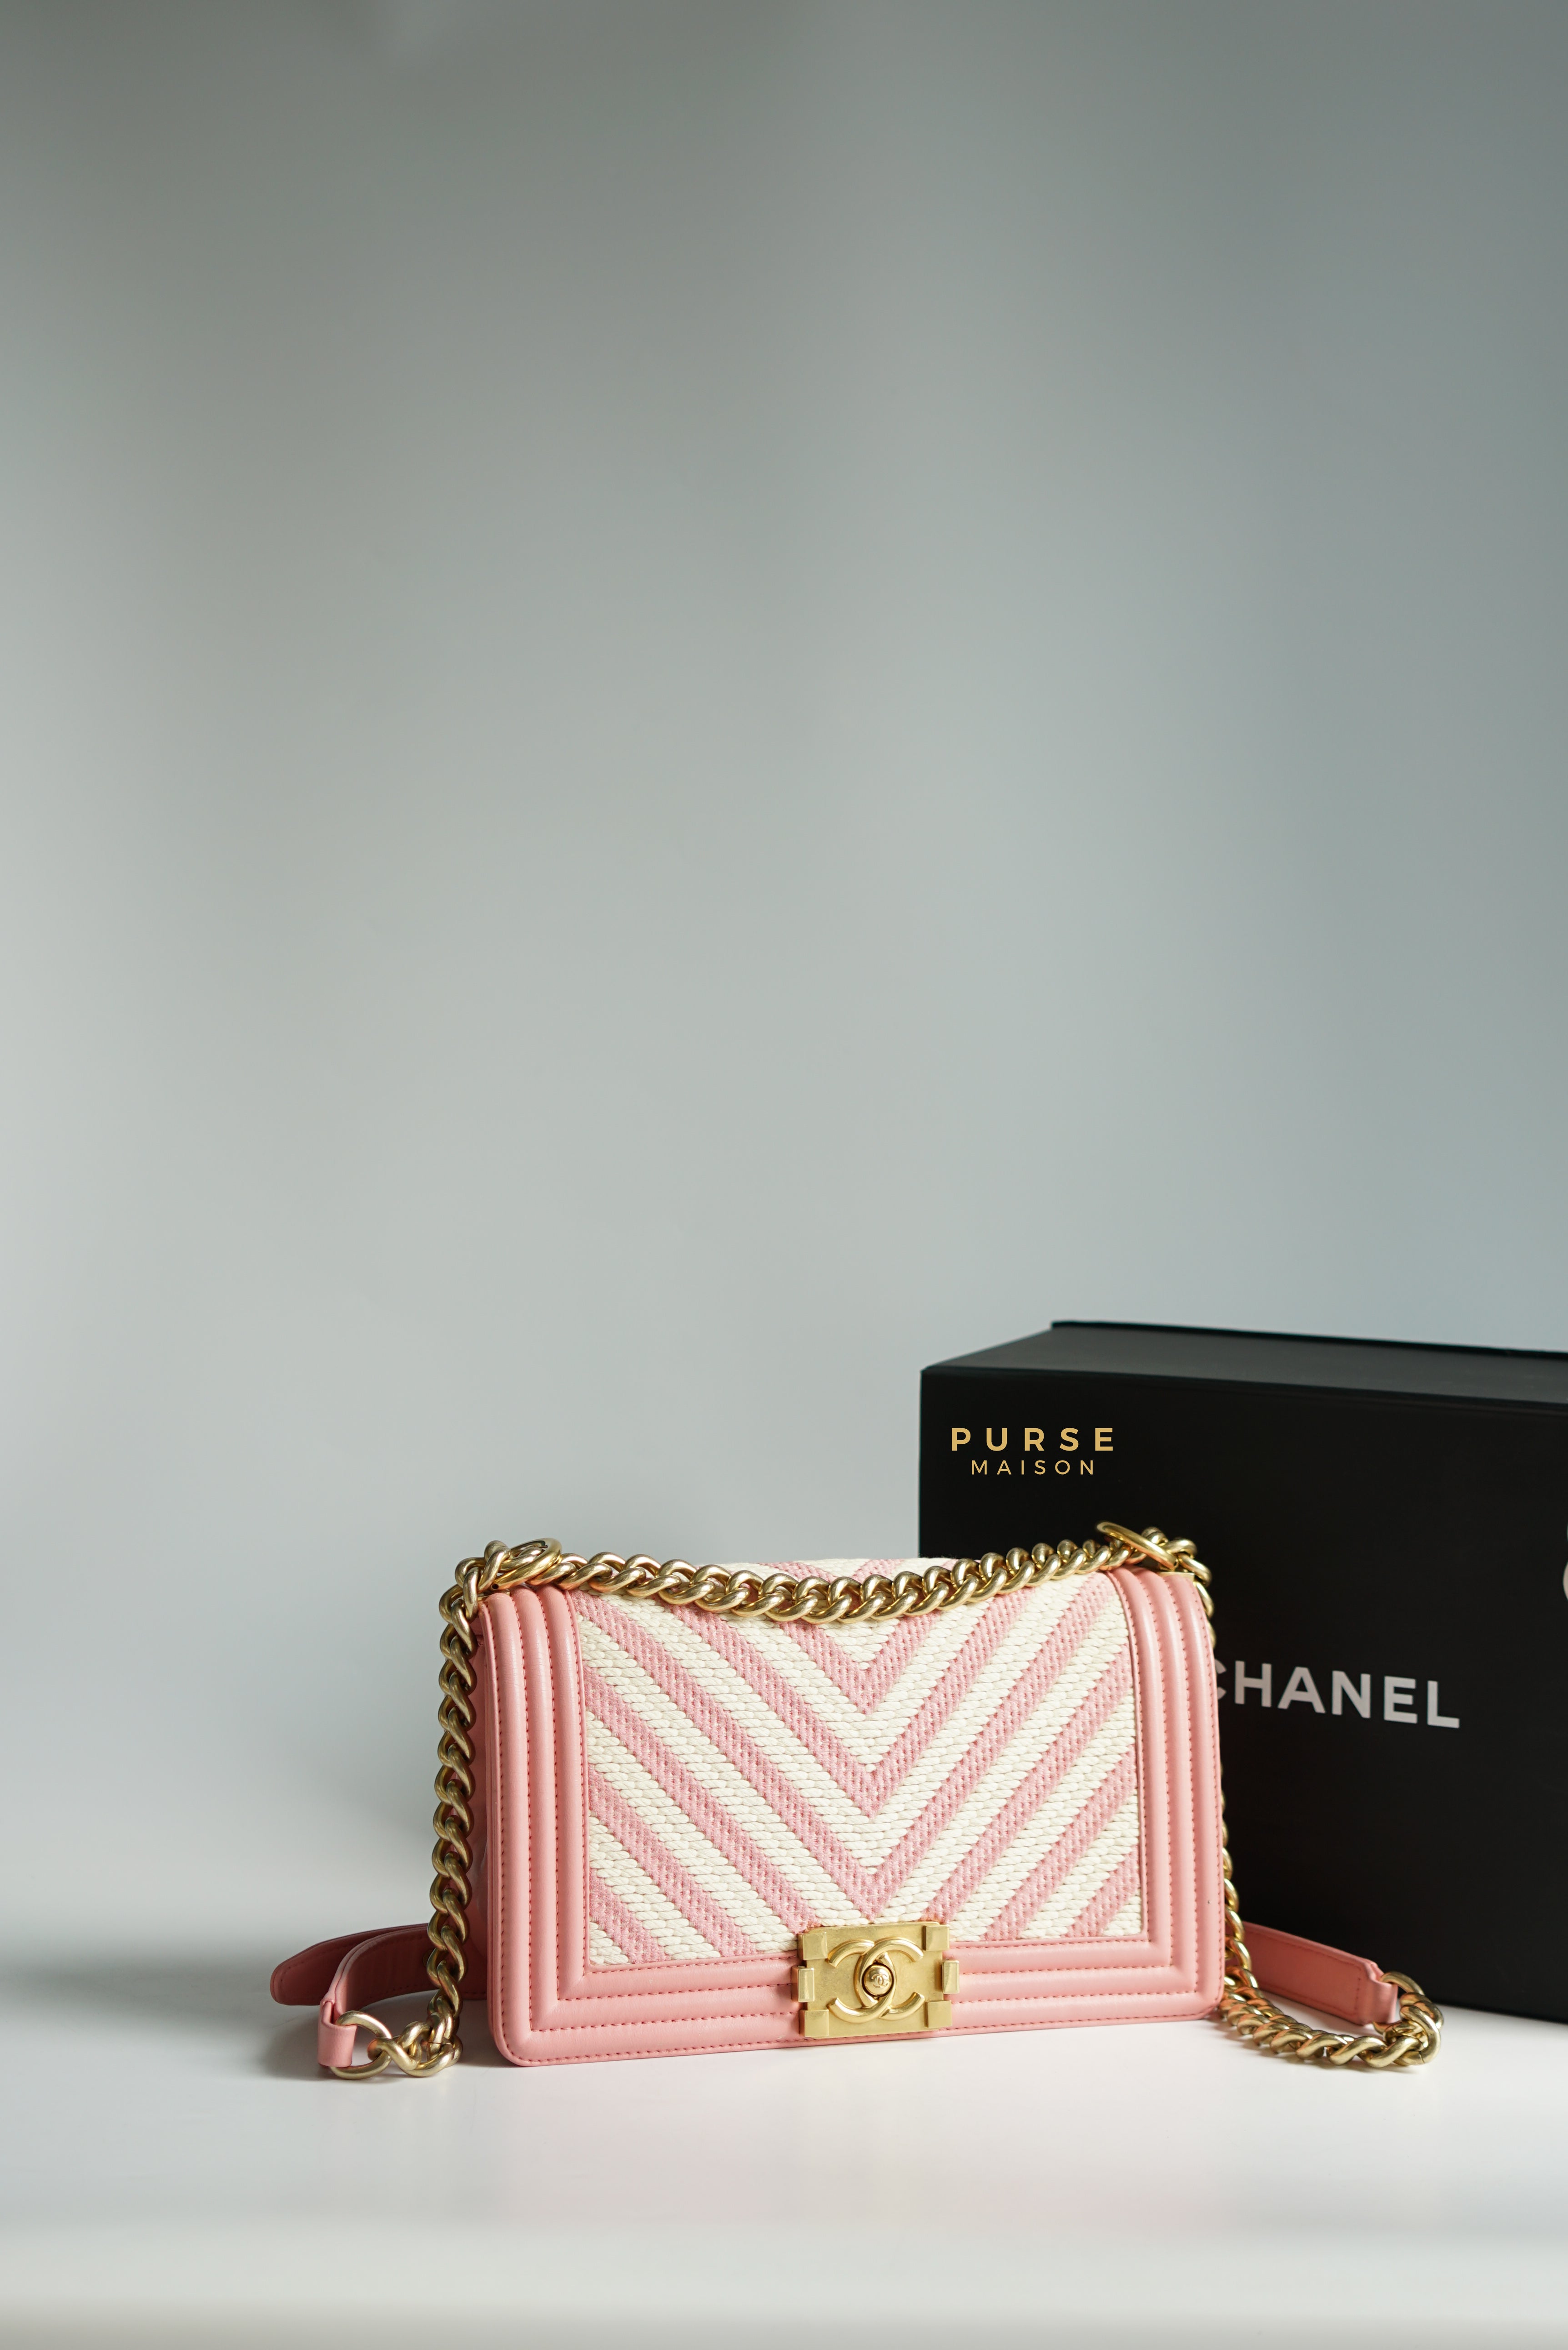 Chanel Aged Calfskin Metallic Gold 2.55 Wallet On Chain (WOC